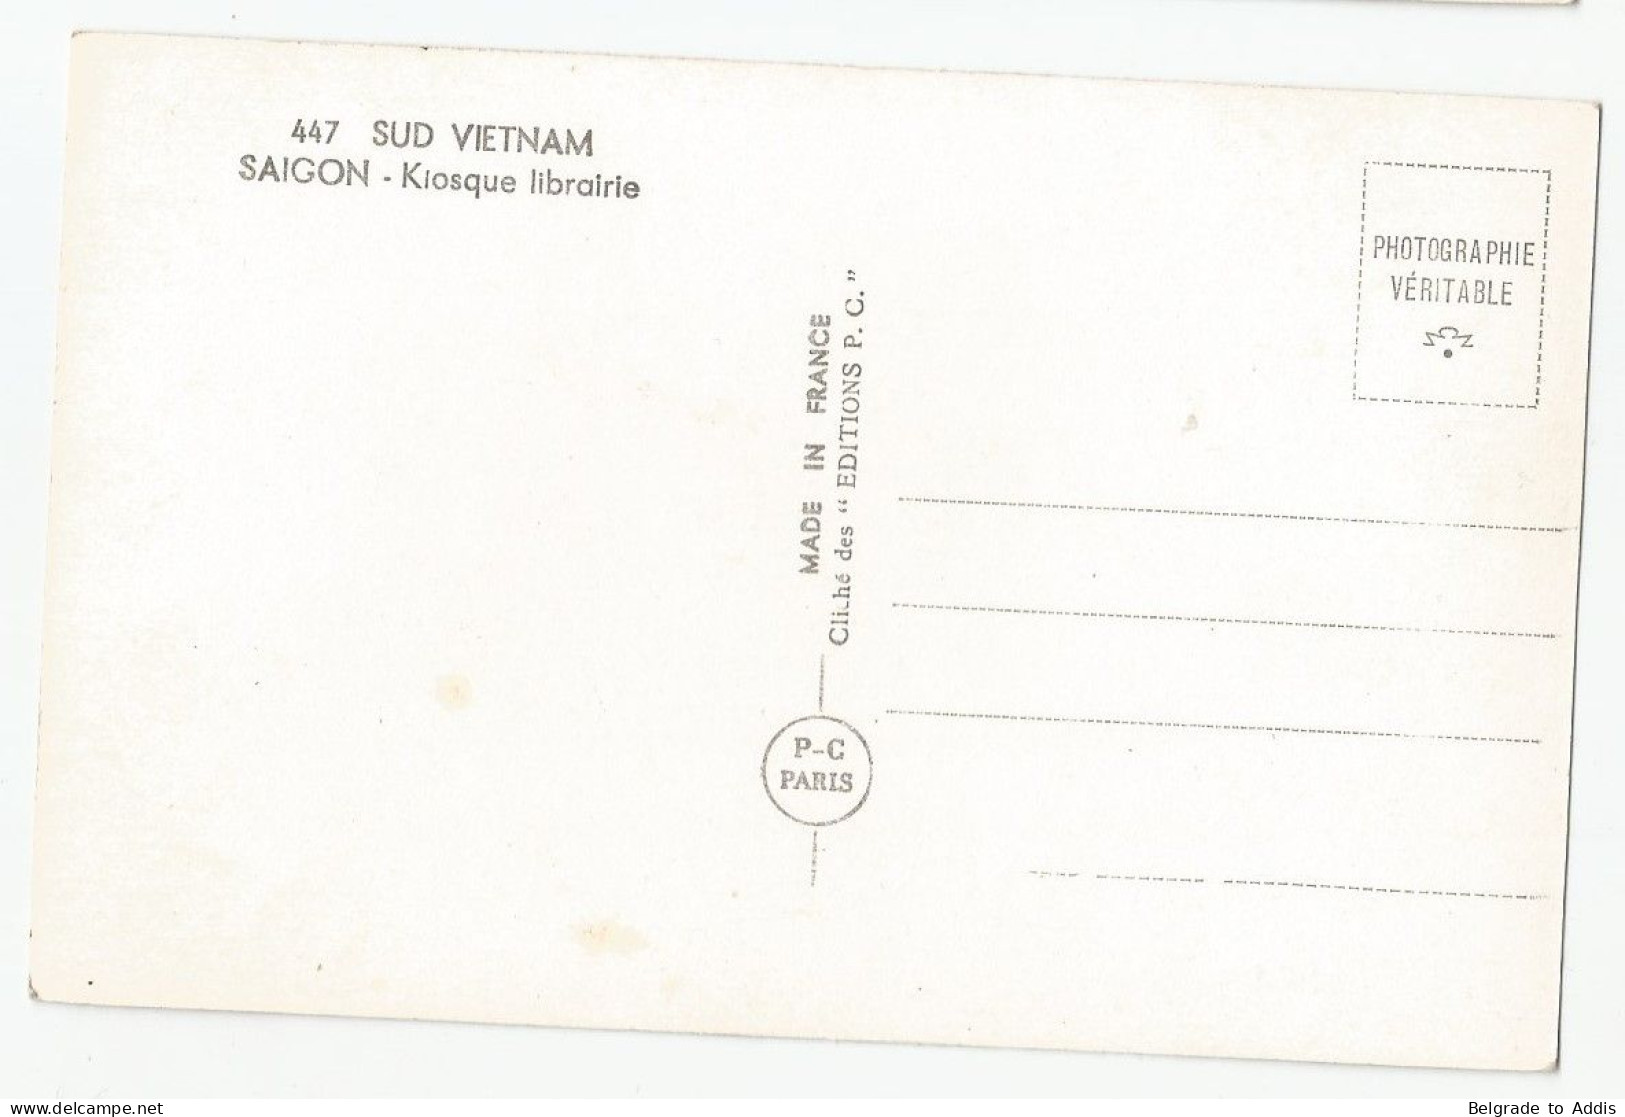 Viêt-Nam Sud Vietnam Postcard Carte Postale CPA Saigon 1953 Kiosque Librairie Citroën - Vietnam